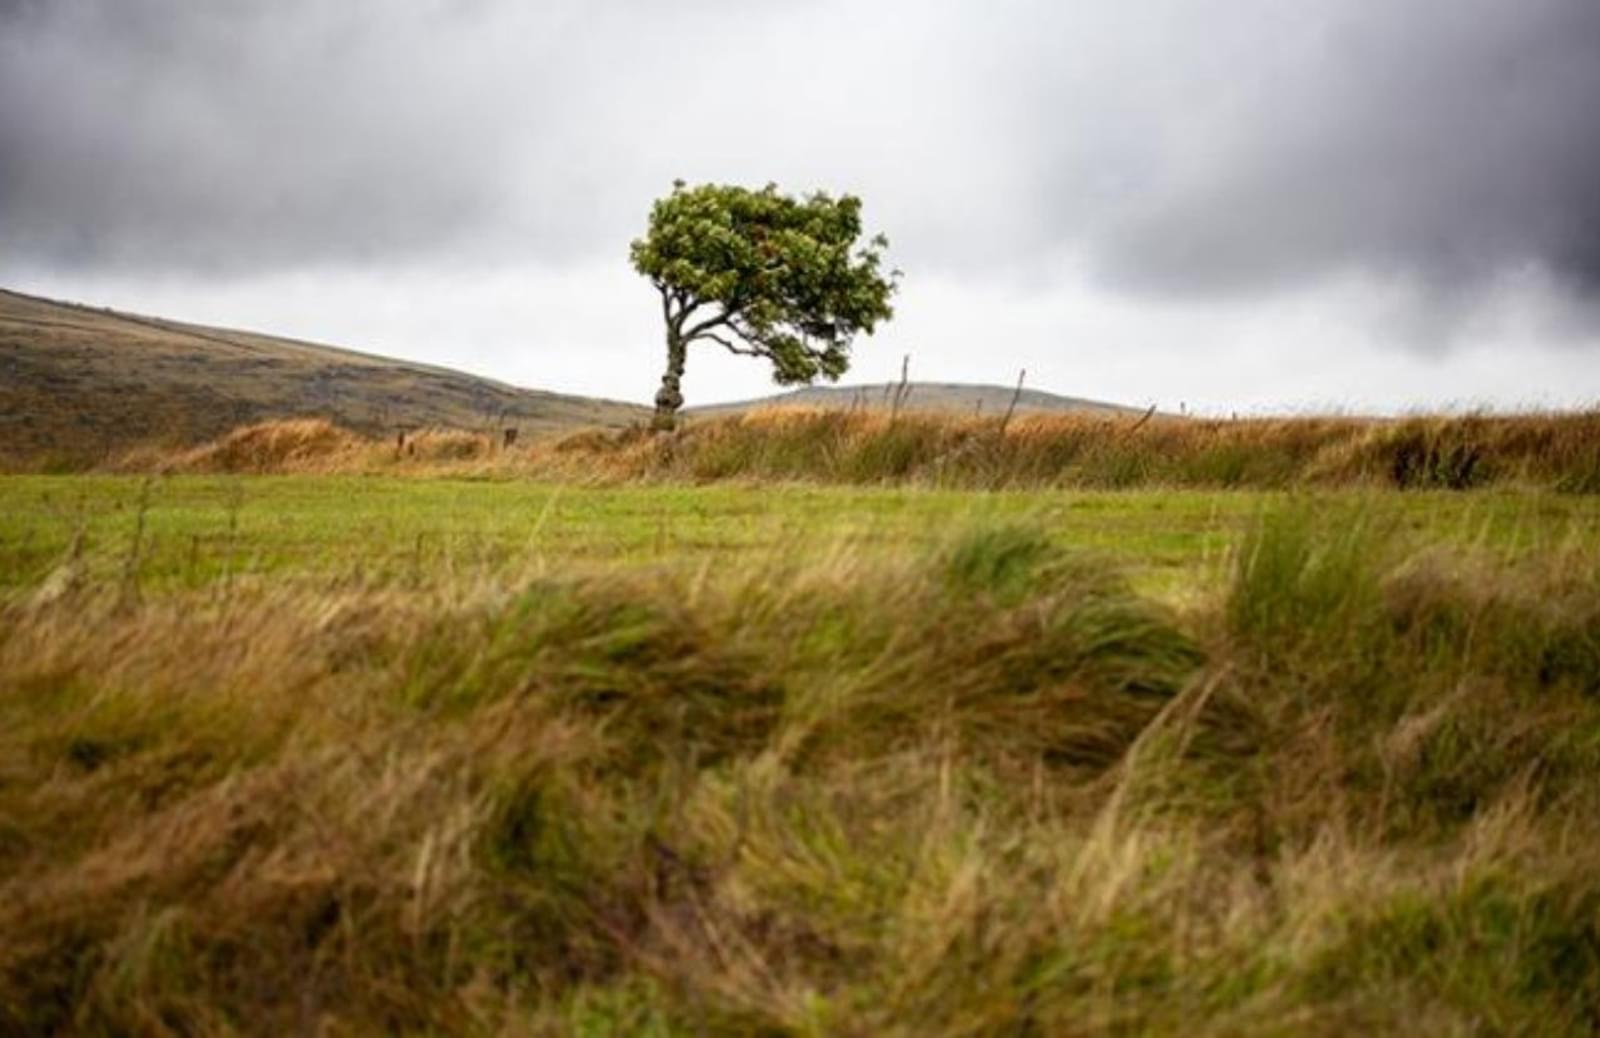 Empty field with one wind-blown tree